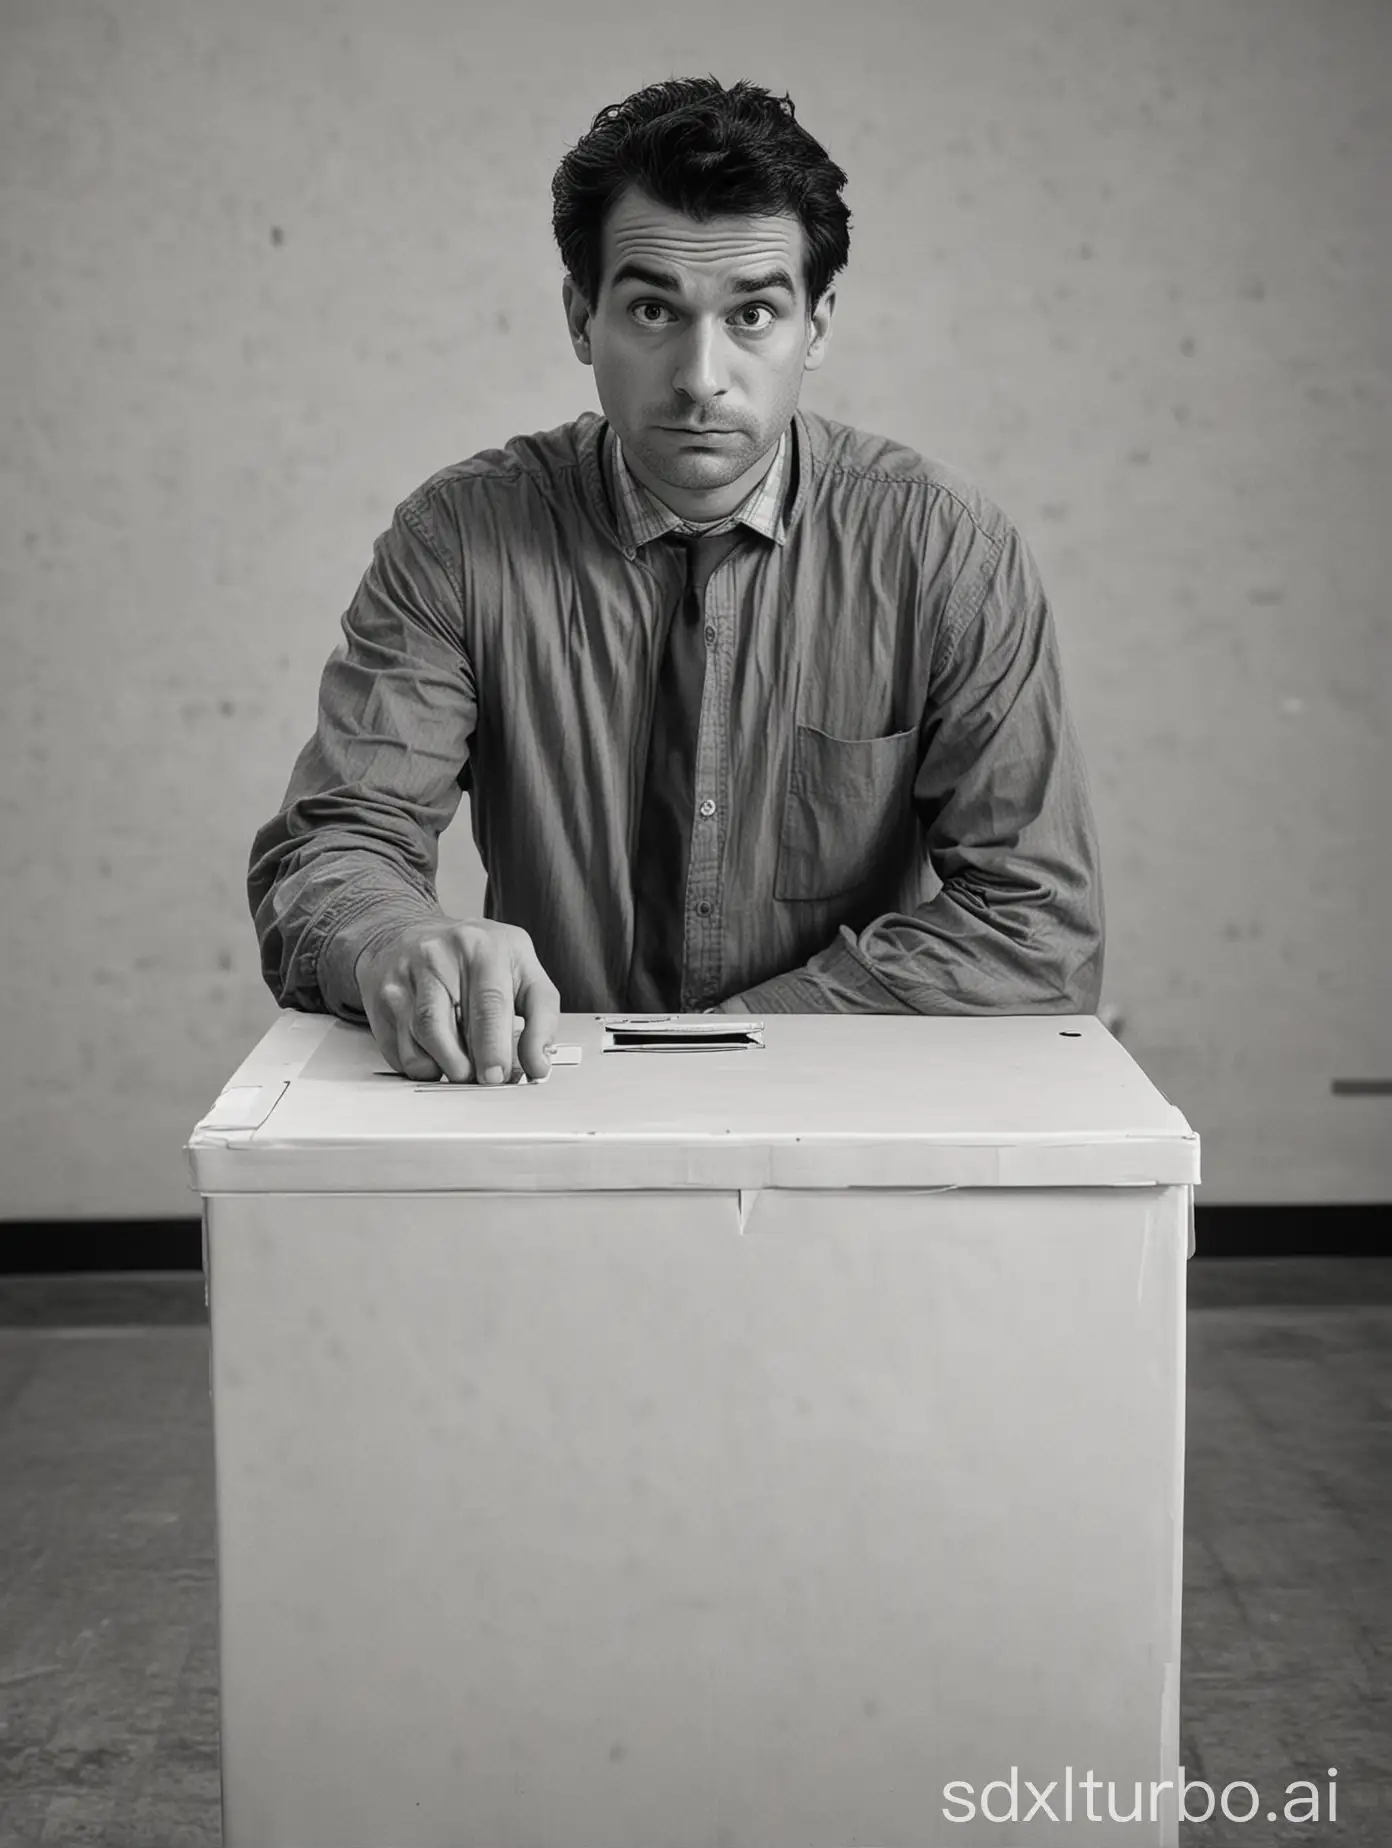 A man, who looks uncertain at a ballot box.